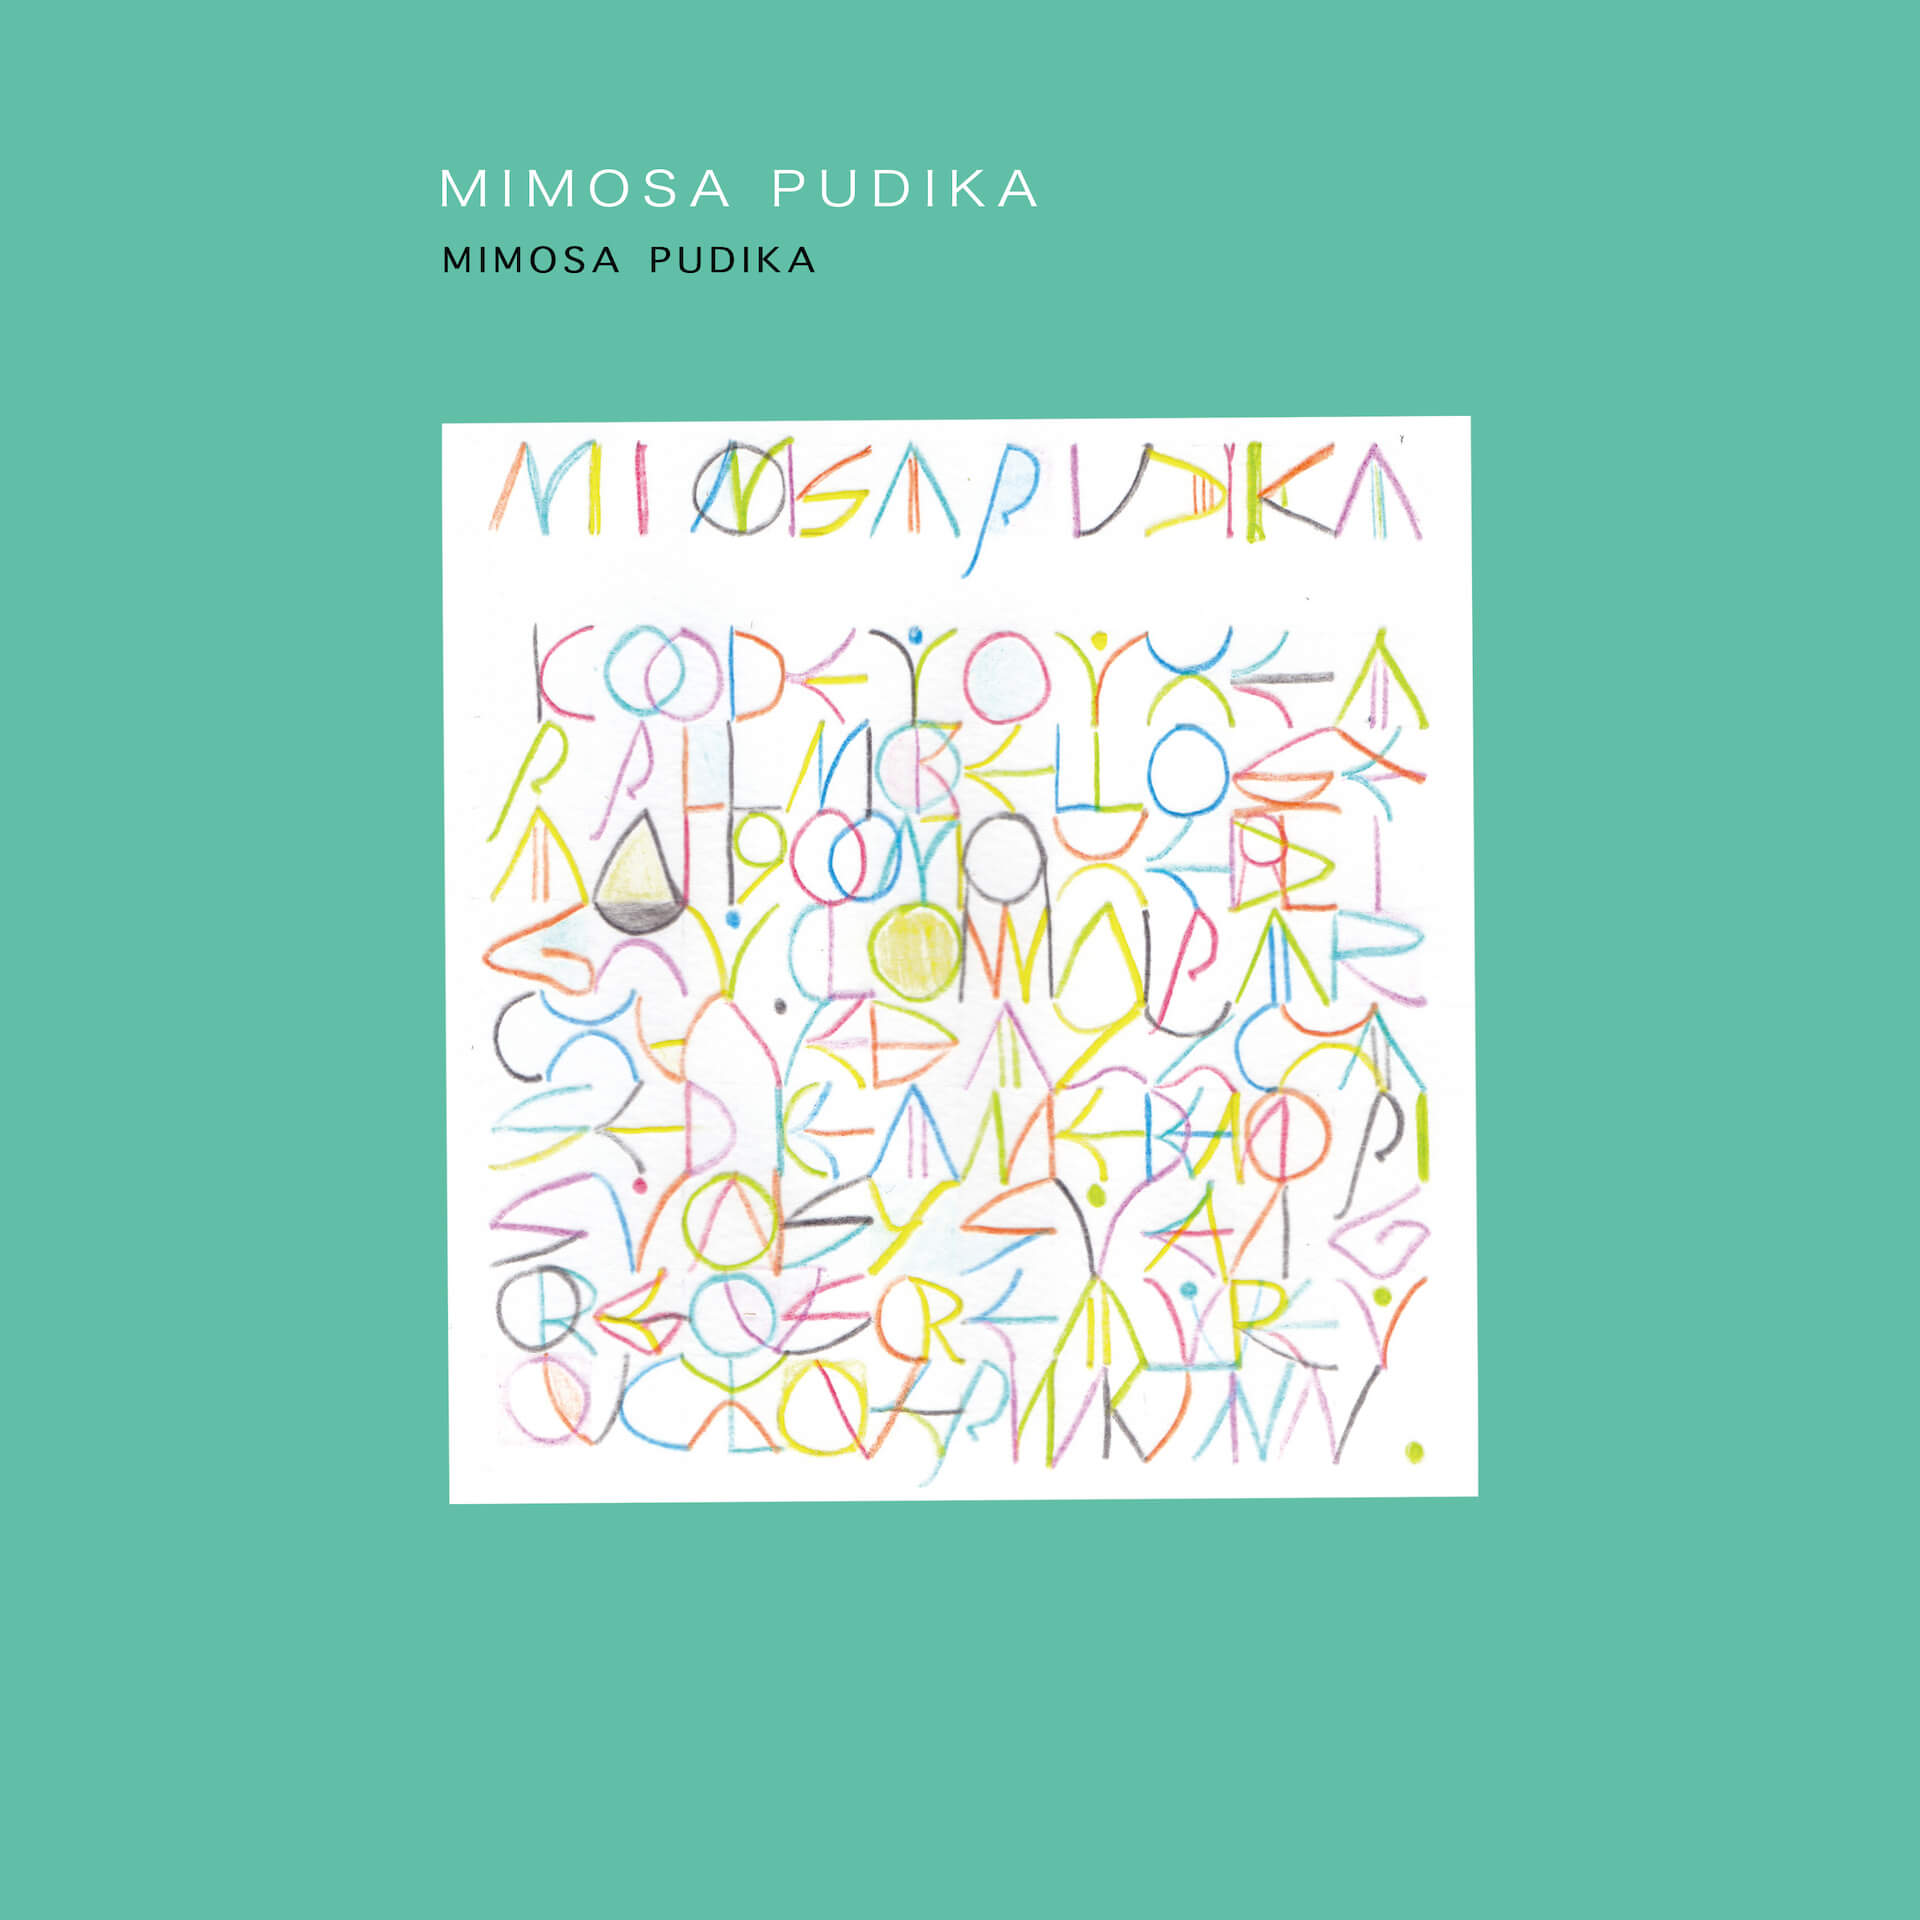 Free Babyronia、Mimosa Pudika名義でアルバム『Mimosa Pudika』をリリース｜アルバムよりシングル「Ocean 1990」先行配信 music221014-mimosa-pudika1